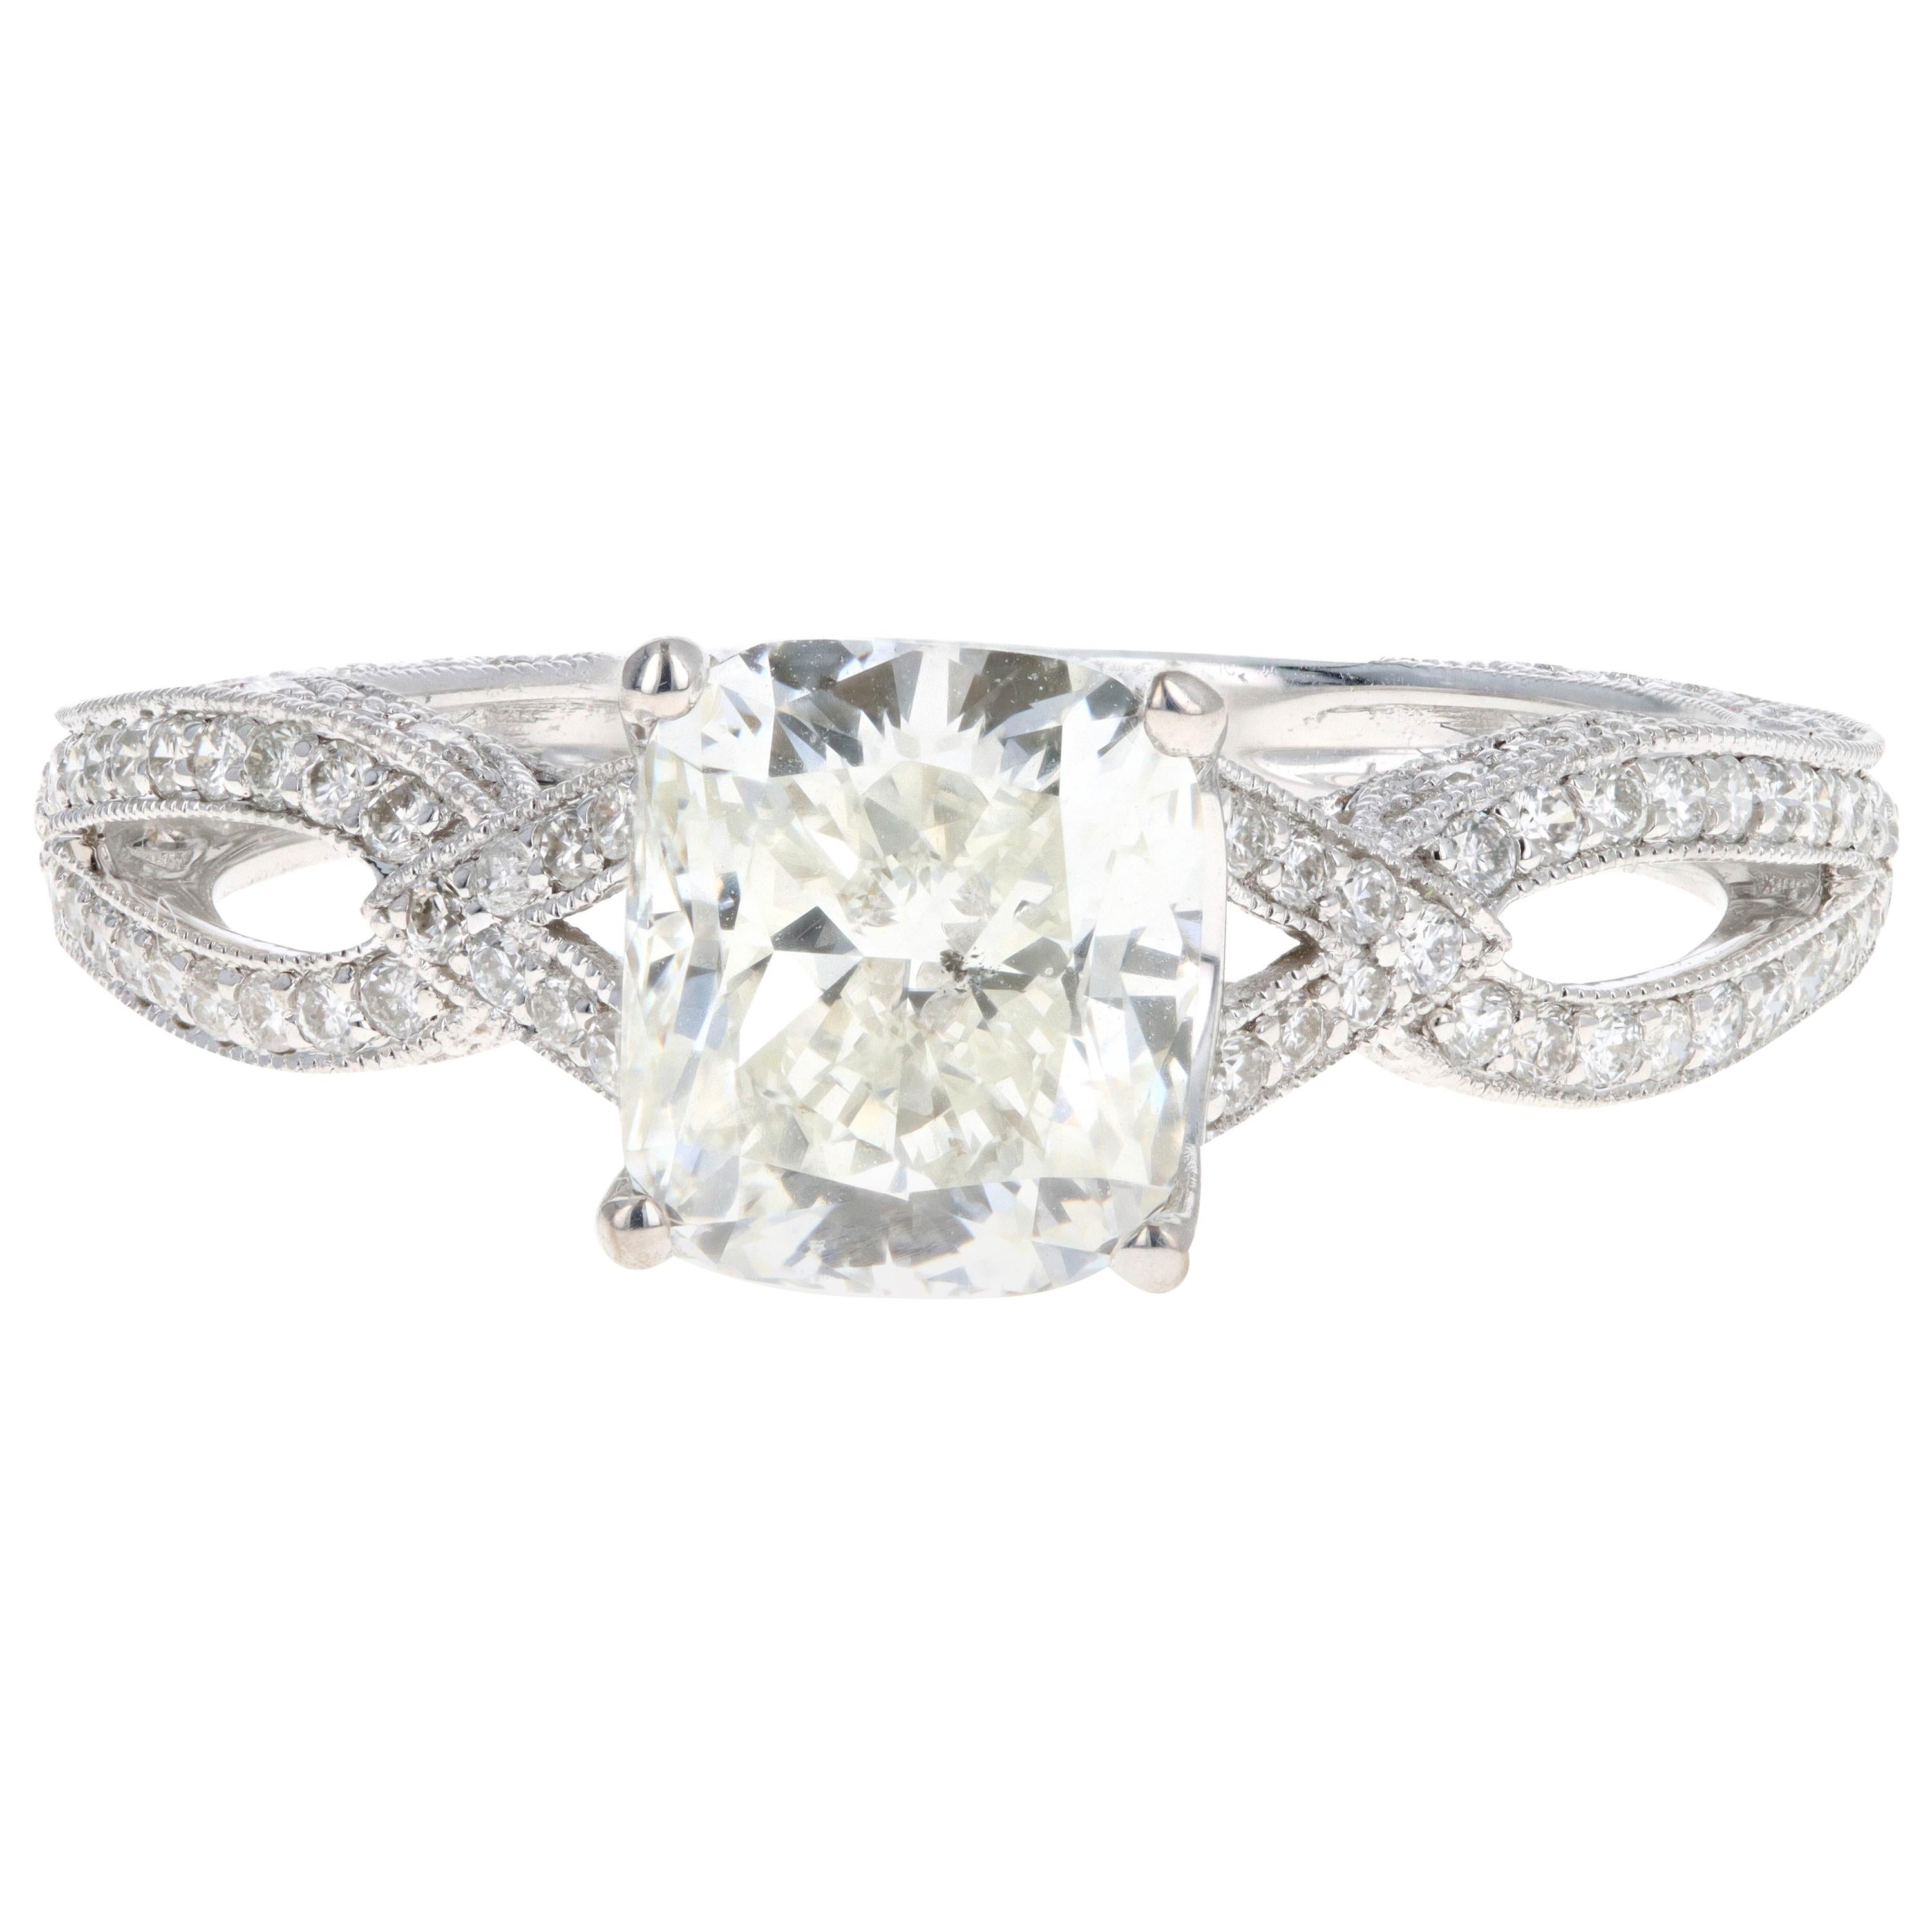 White Gold 1.71 Carat Cushion Cut Diamond Engagement Ring